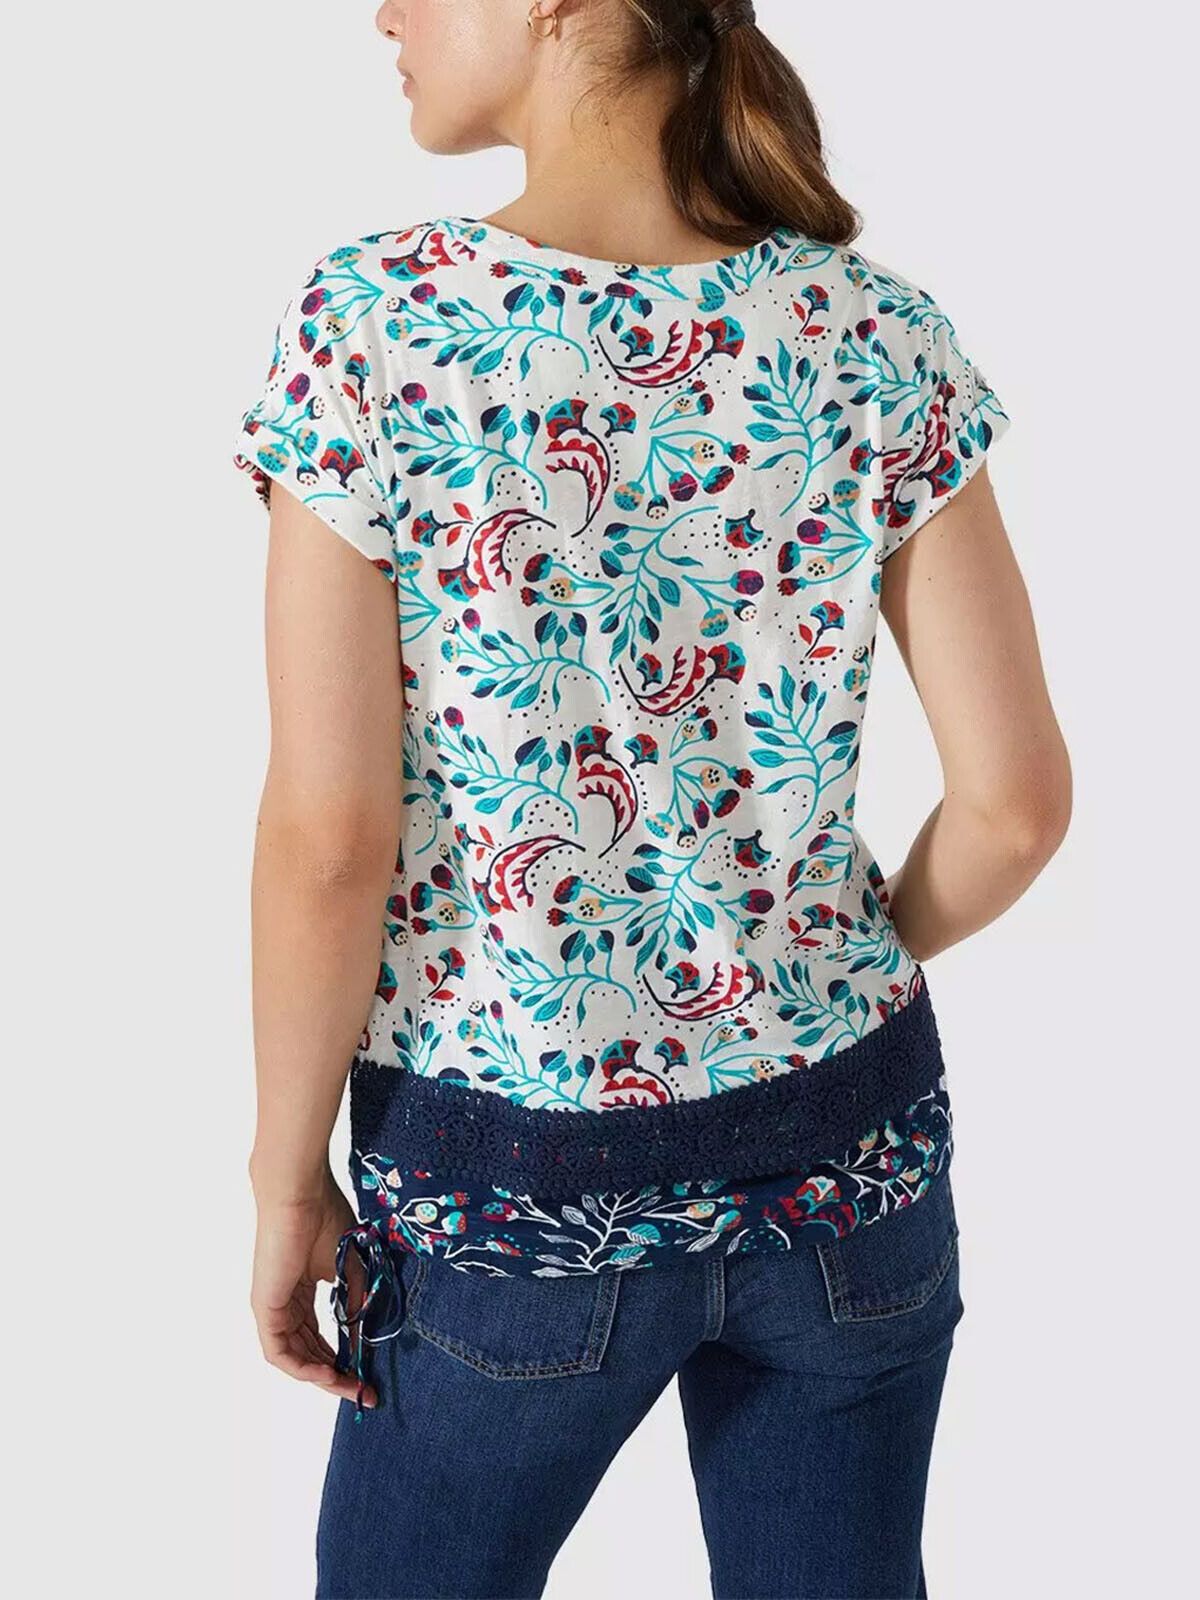 Mantaray Poppy Seed Floral Lace Hem T-Shirt Sizes 8 10 12 14 16 18 20 RRP £25